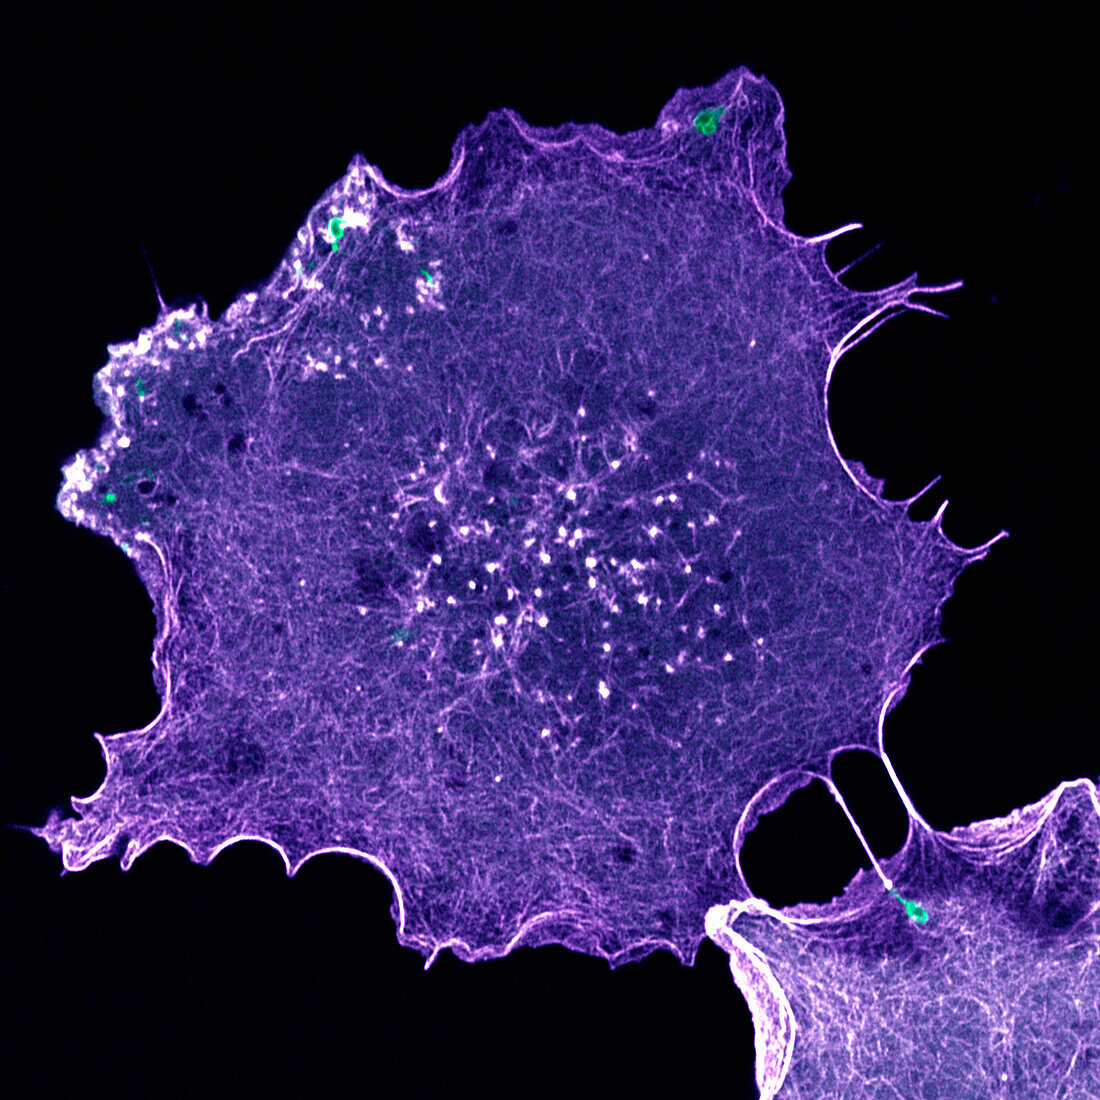 Actin cytoskeleton, confocal light micrograph